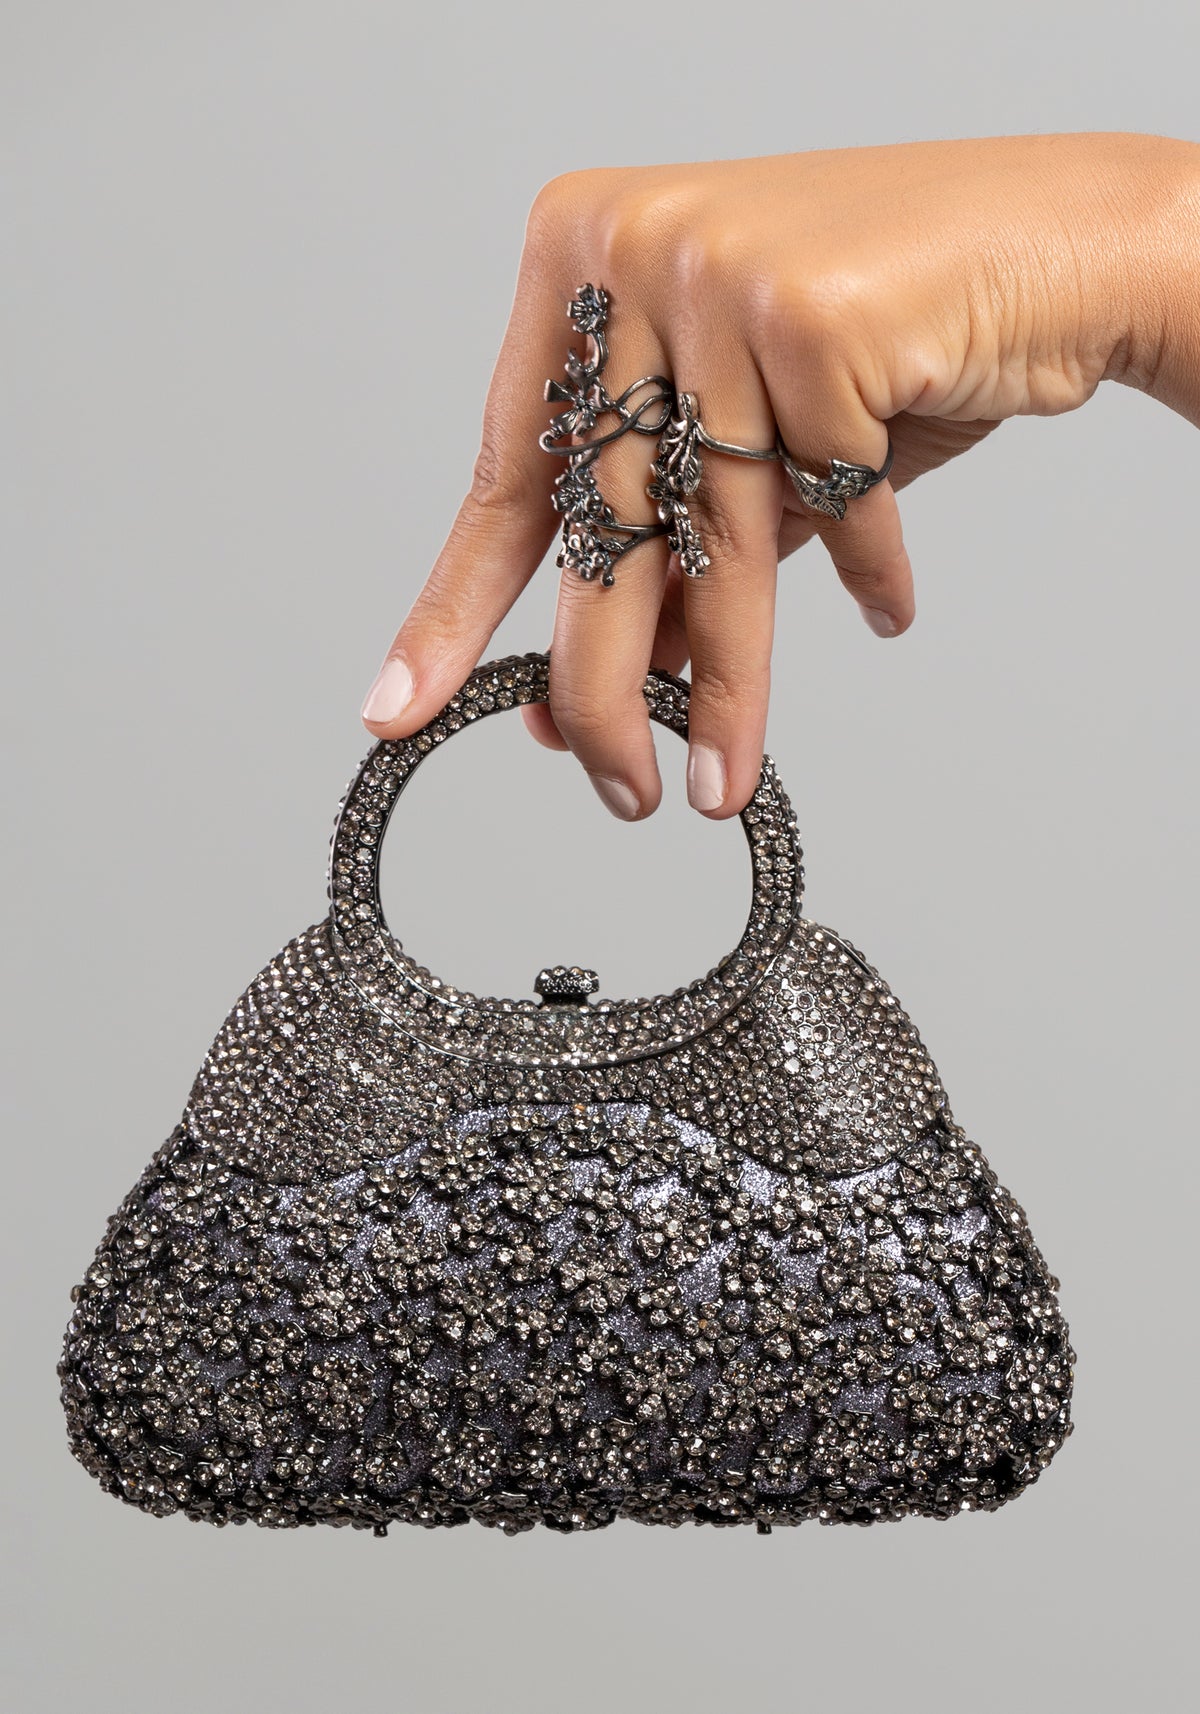 Black gemstone decorated handbag